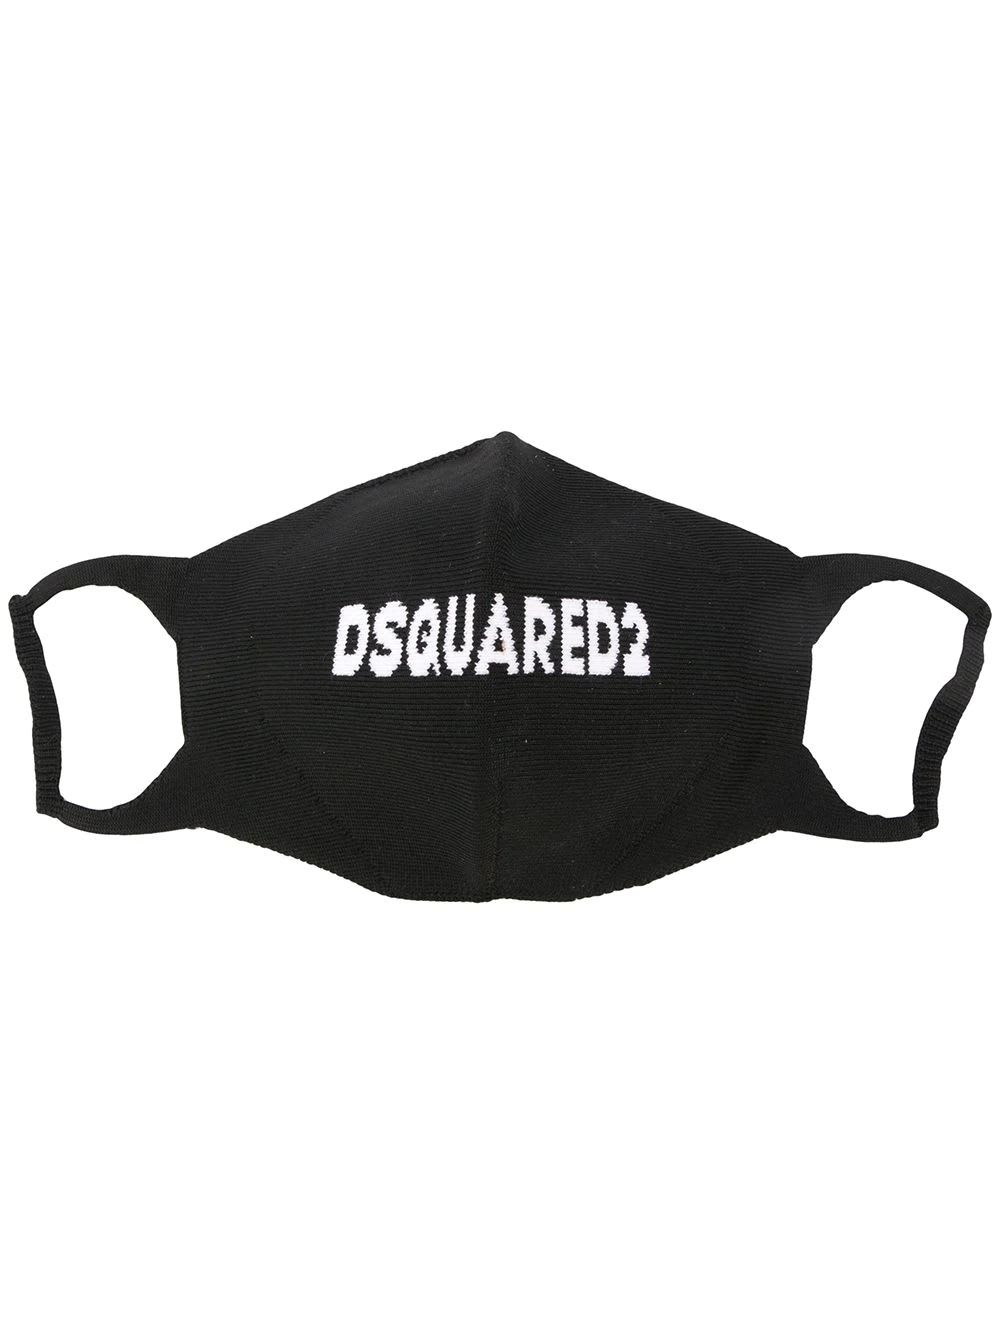 Dsquared2 Black Face Mask